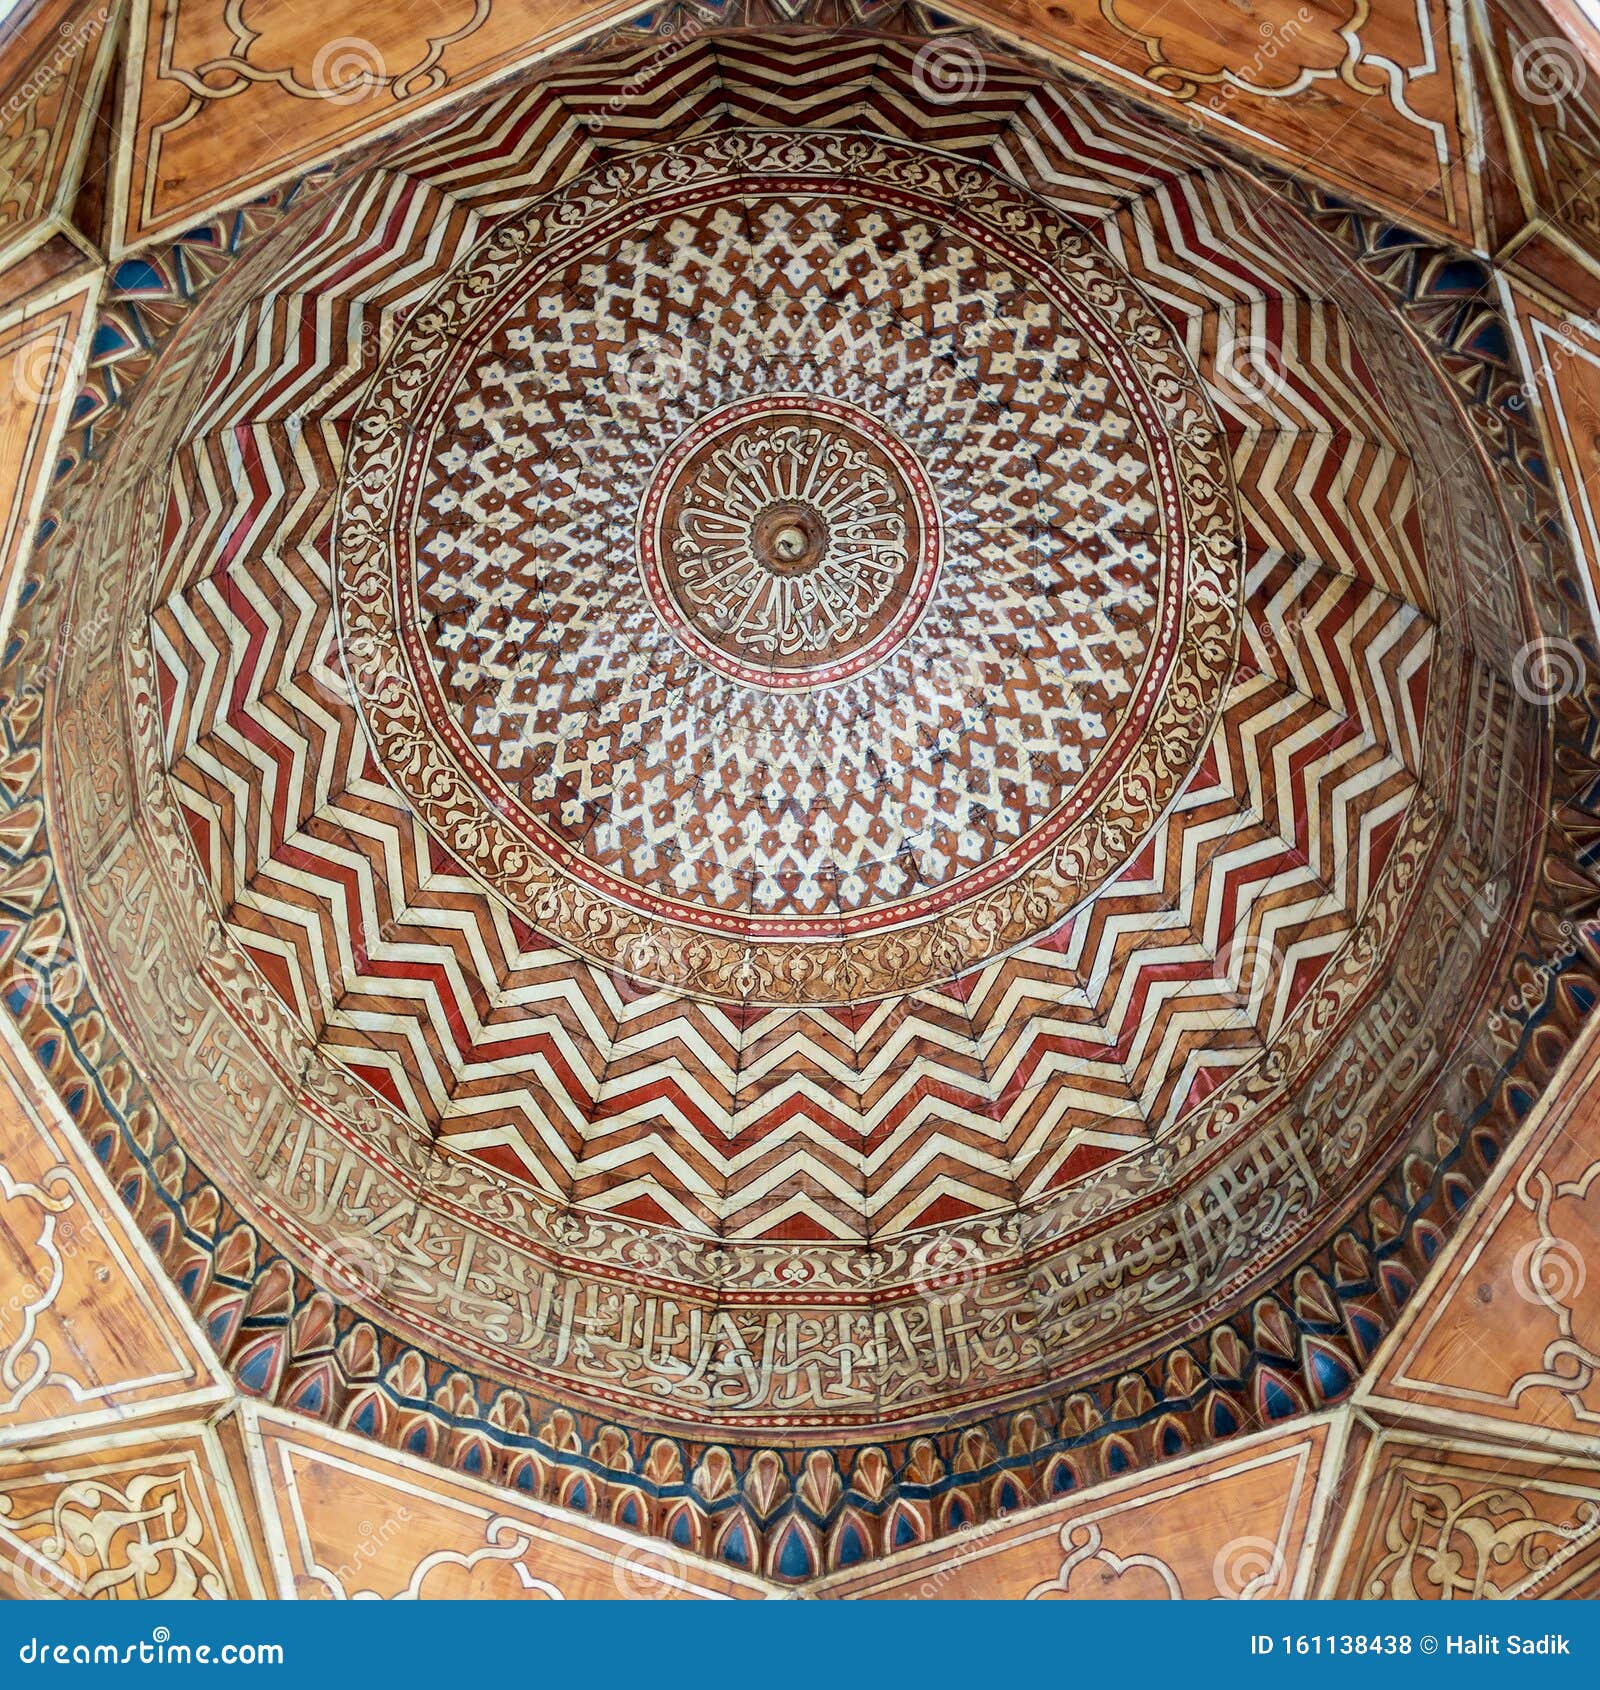 dome decorated with colorful patterns at mamluk era public historic sultan barquq mosque, cairo